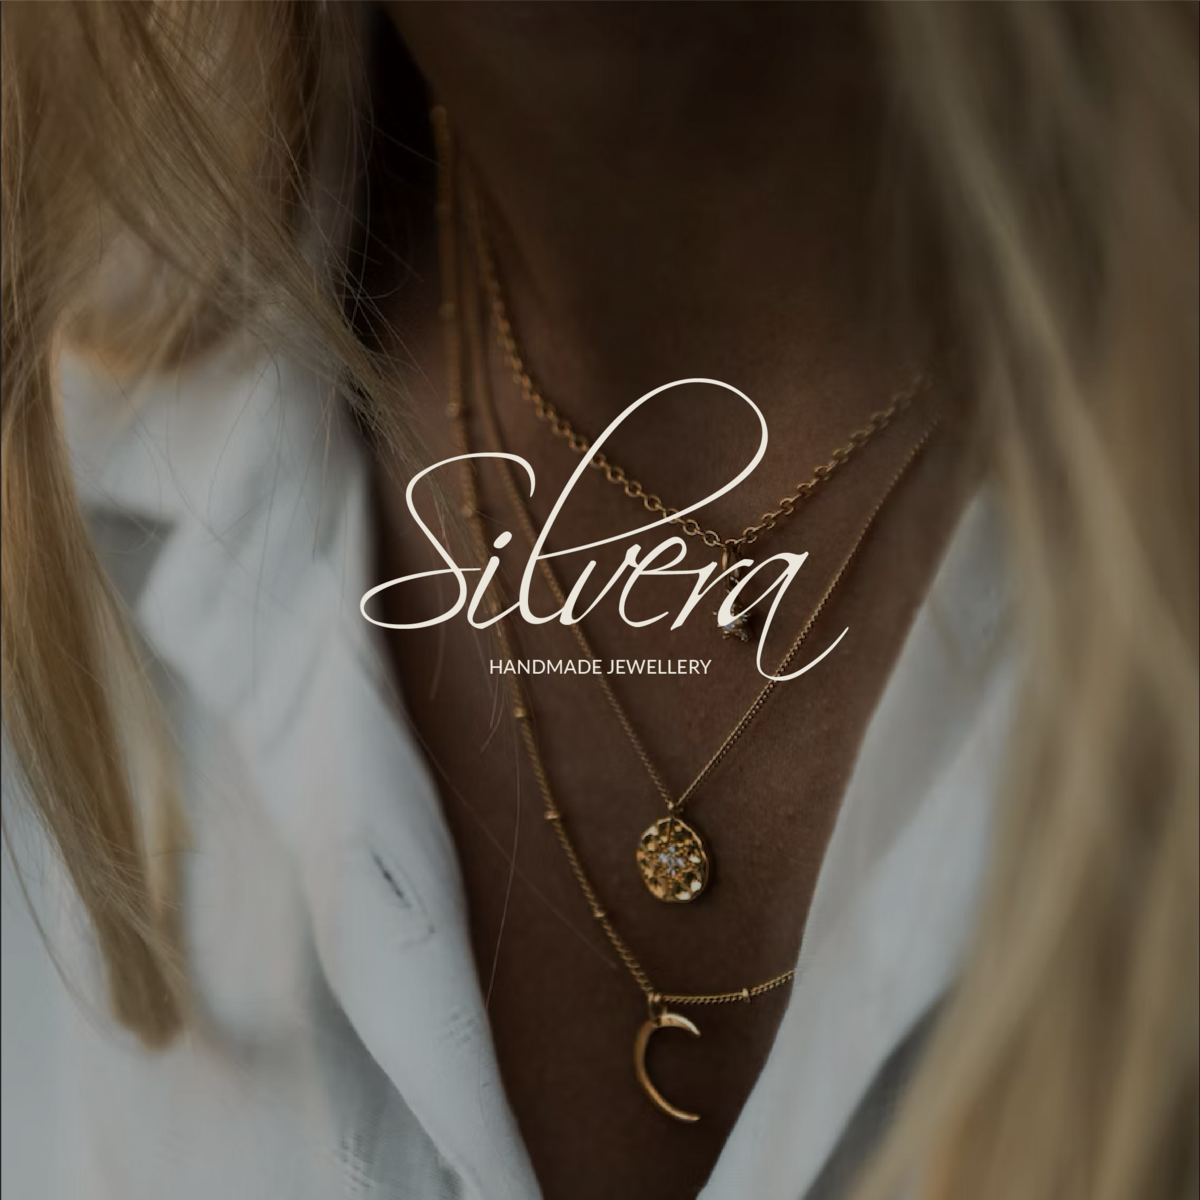 silvera-jewelry-branding-6